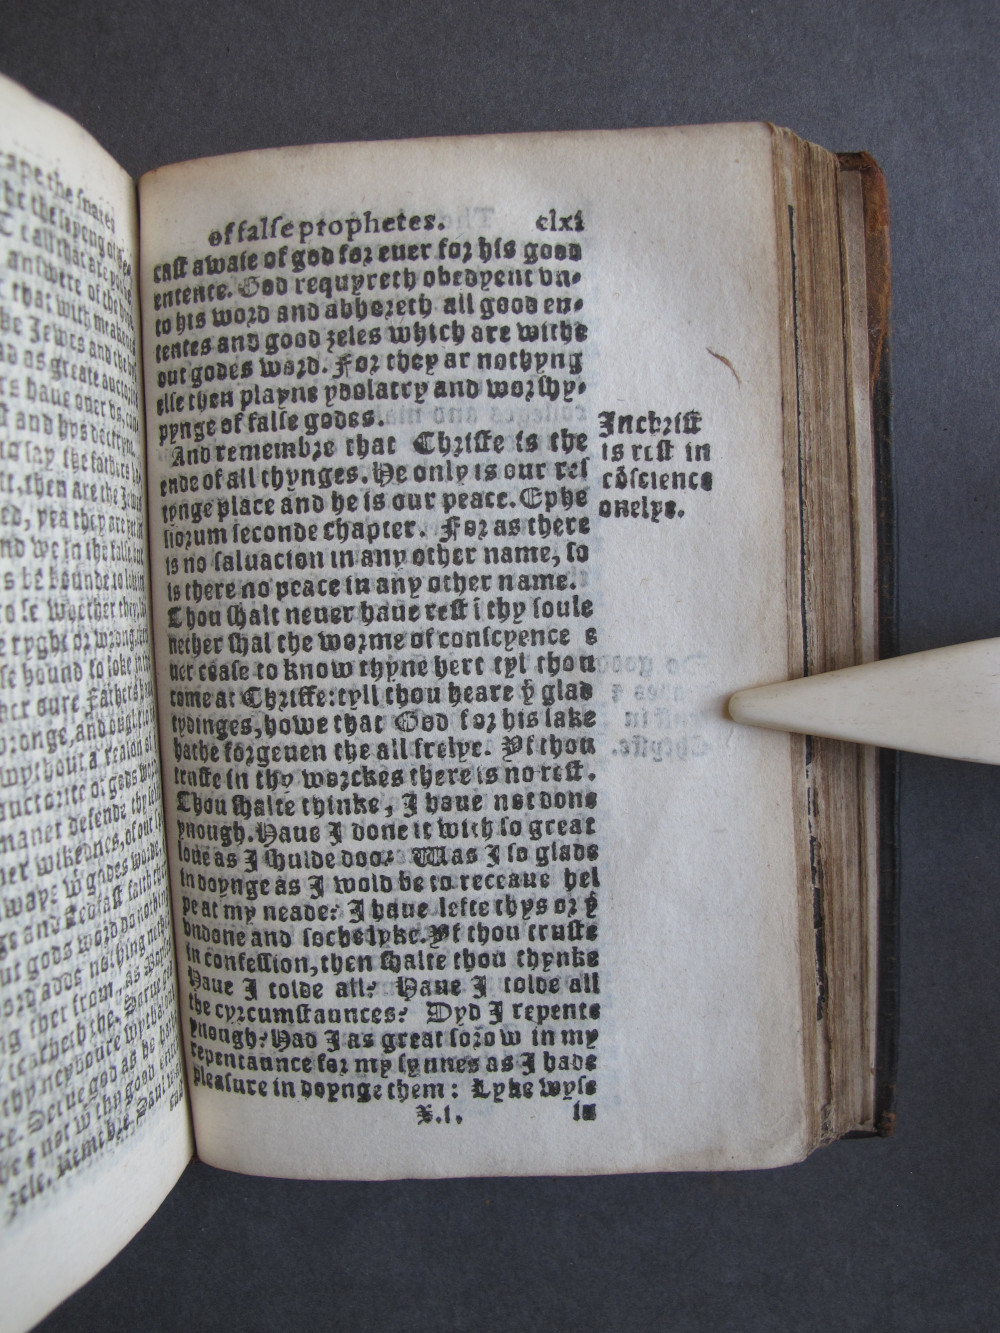 1 Folio X1 recto